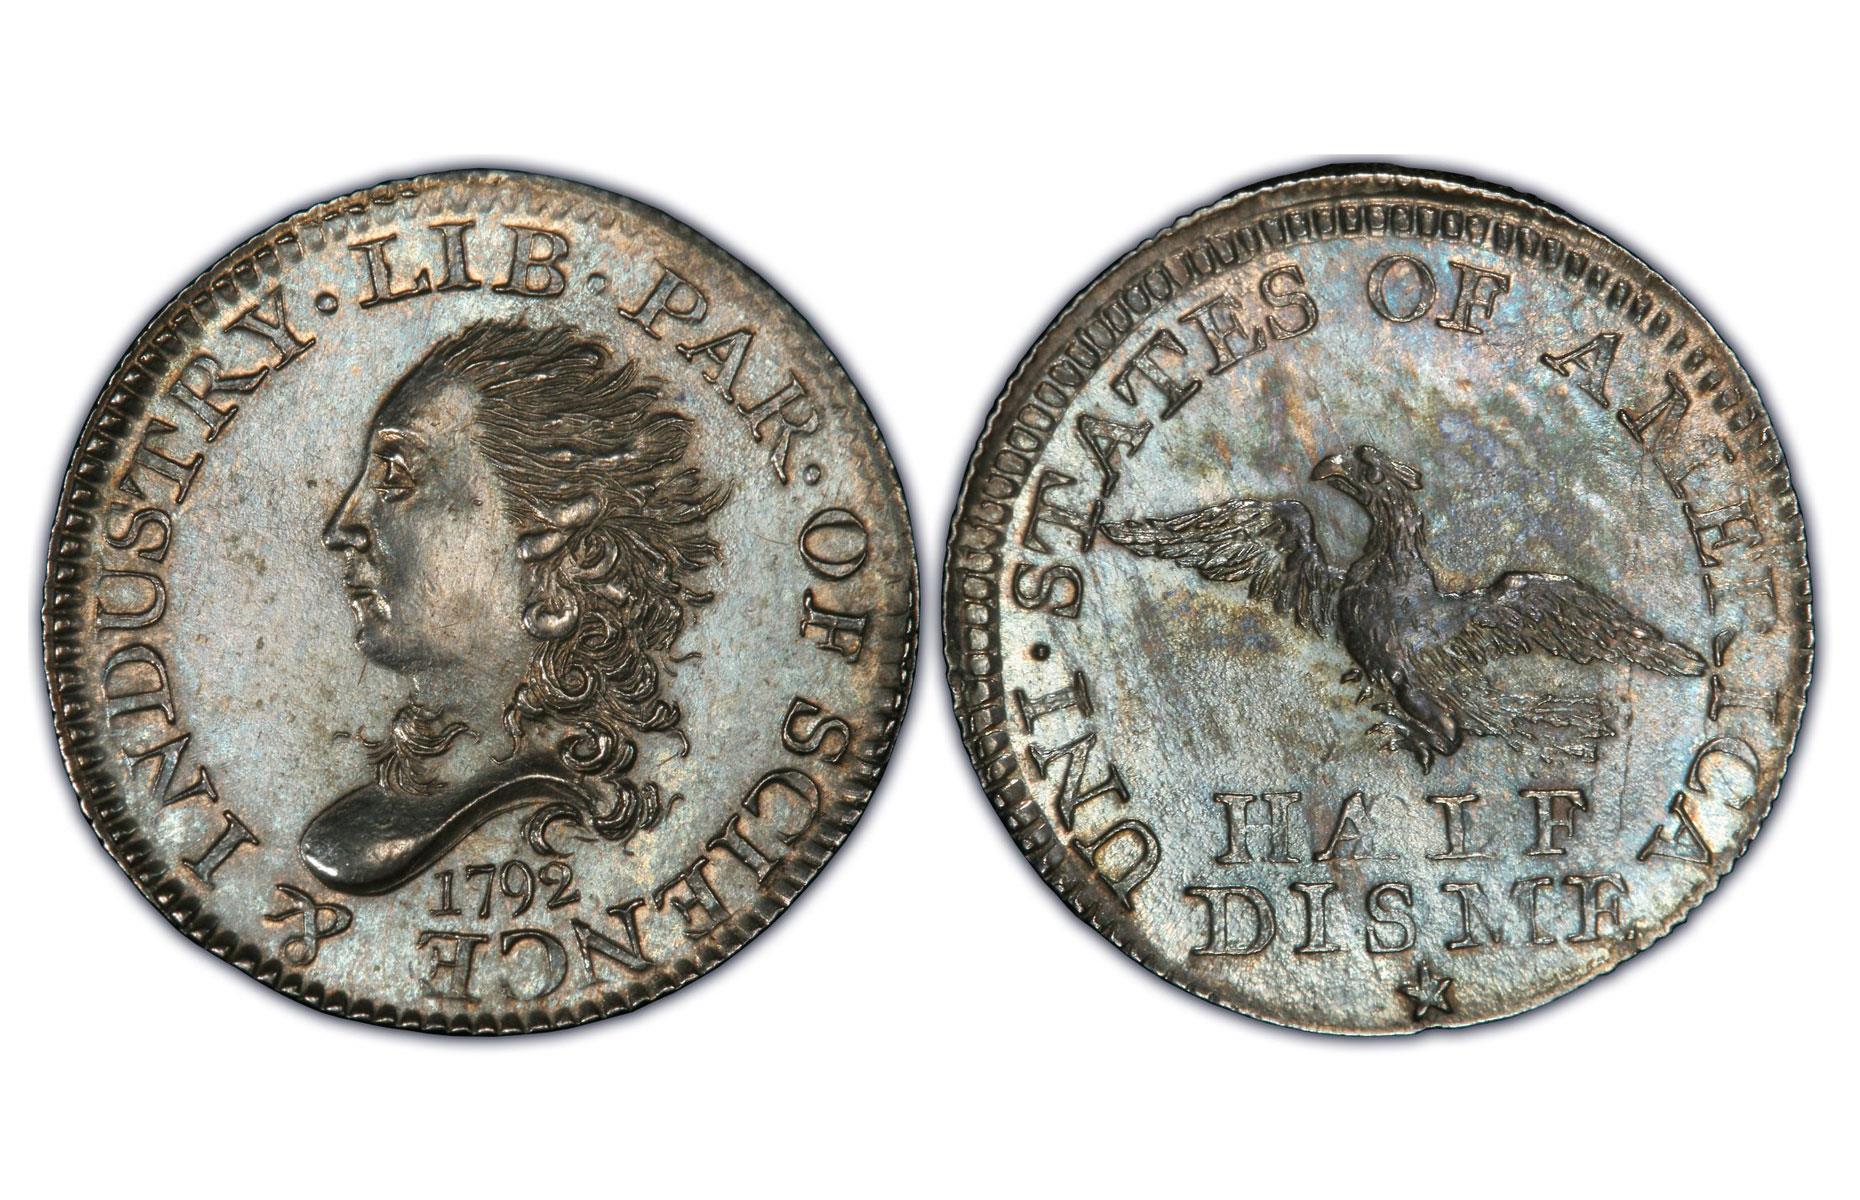 First US dollar coin